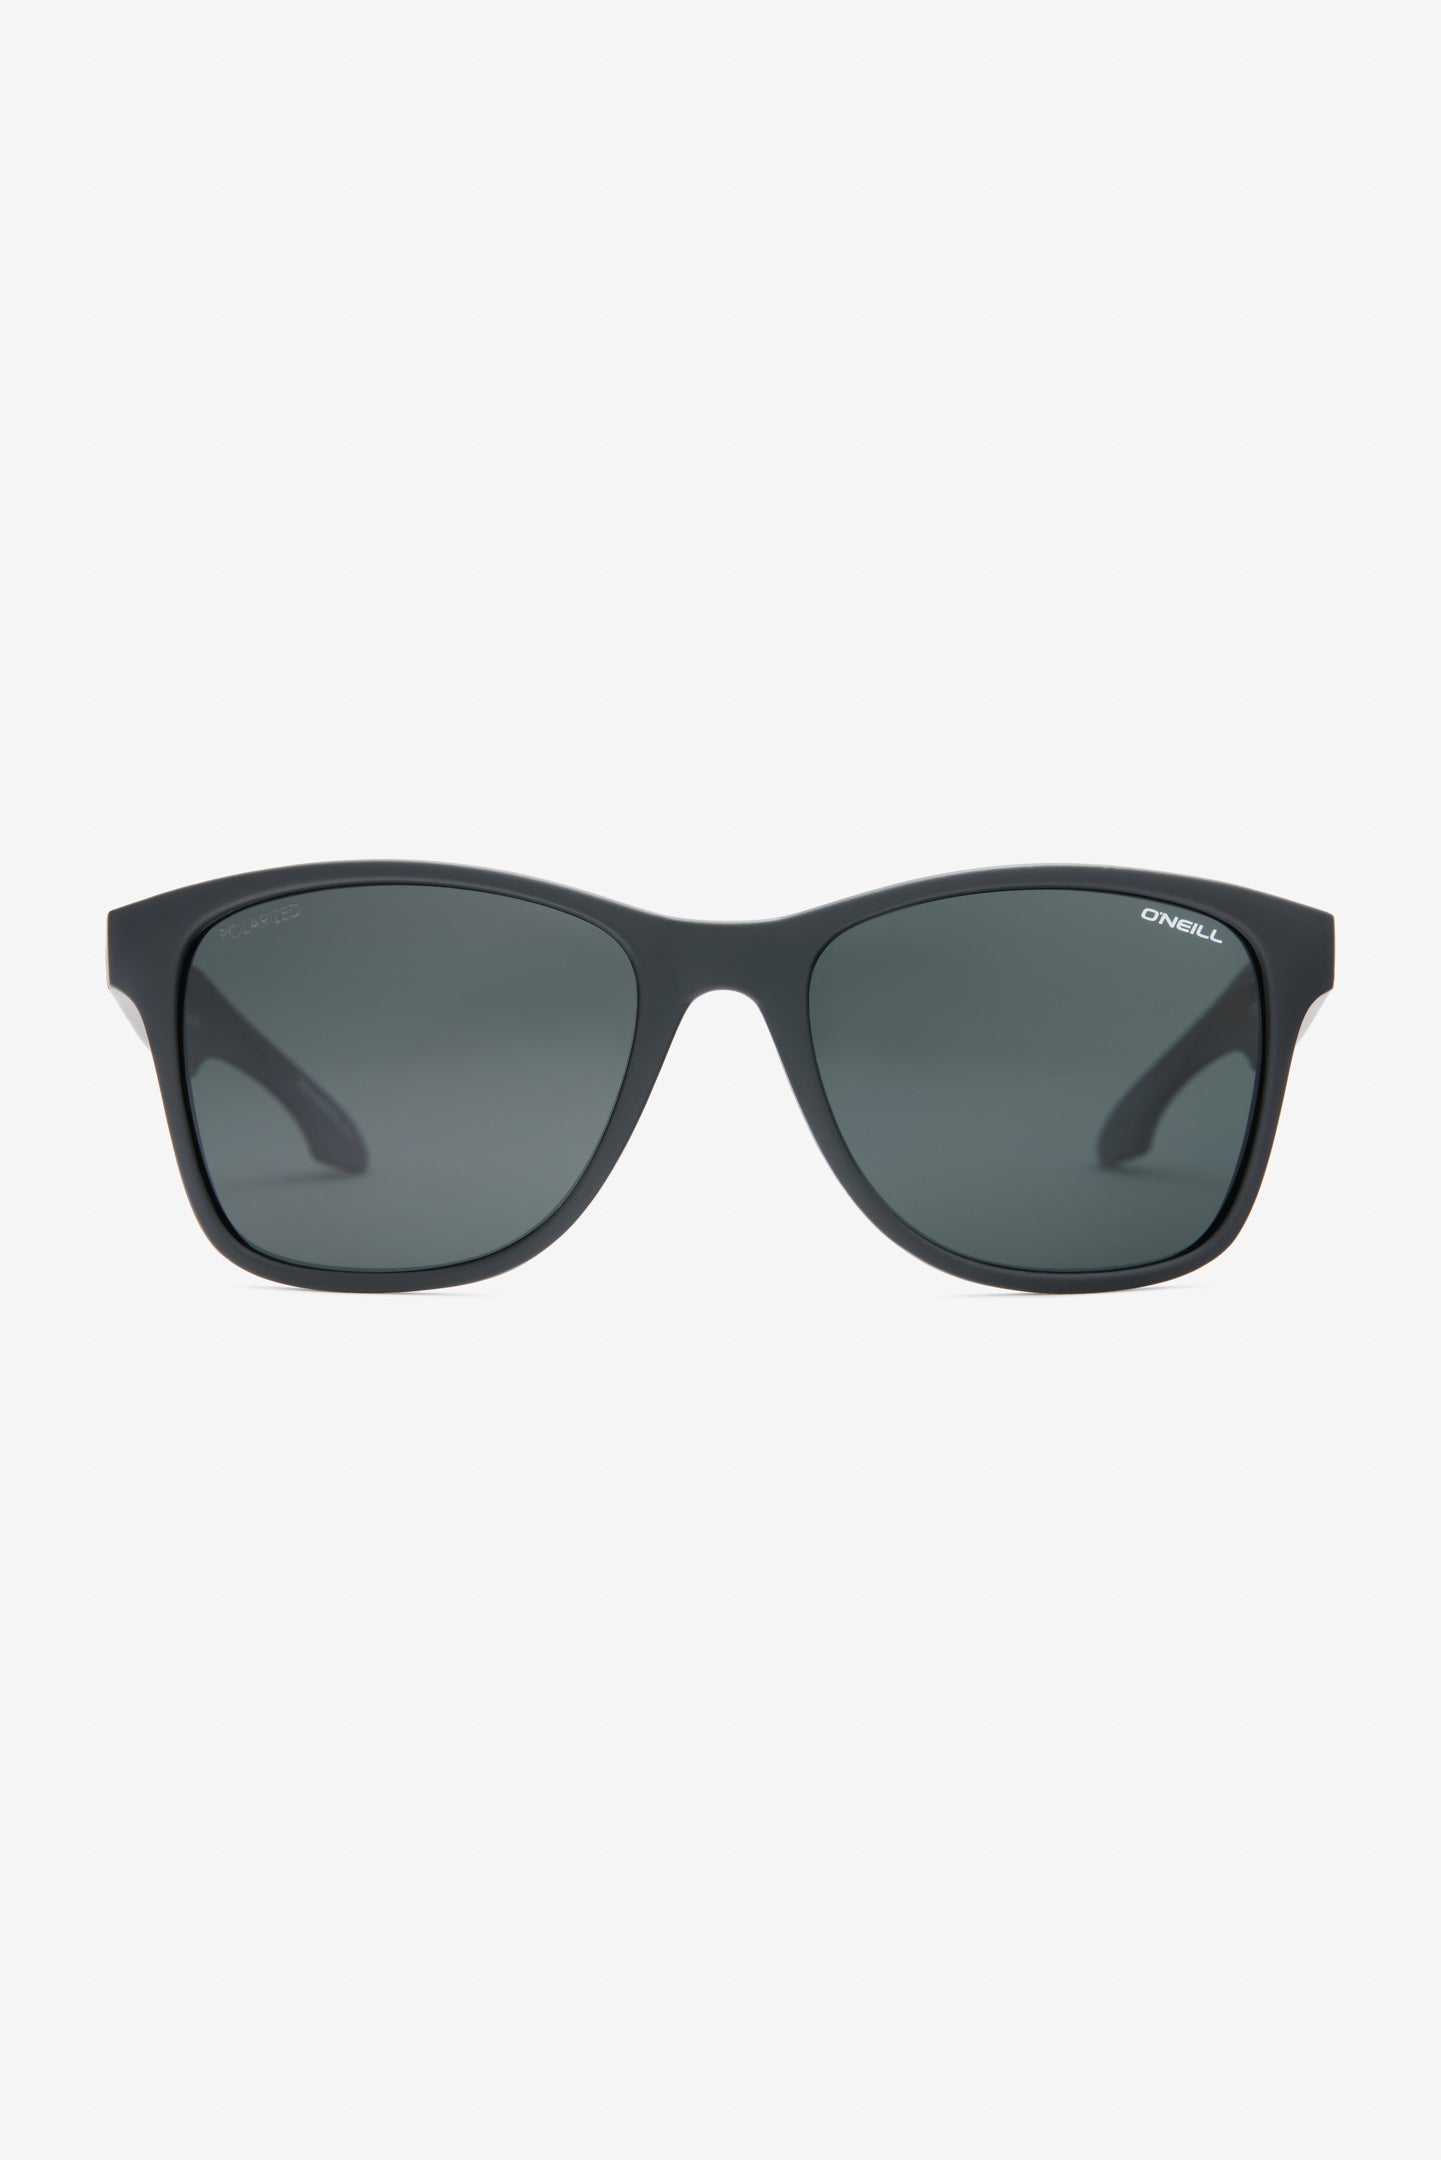 Shore 2.0 Sunglasses - Blk Green | O'Neill